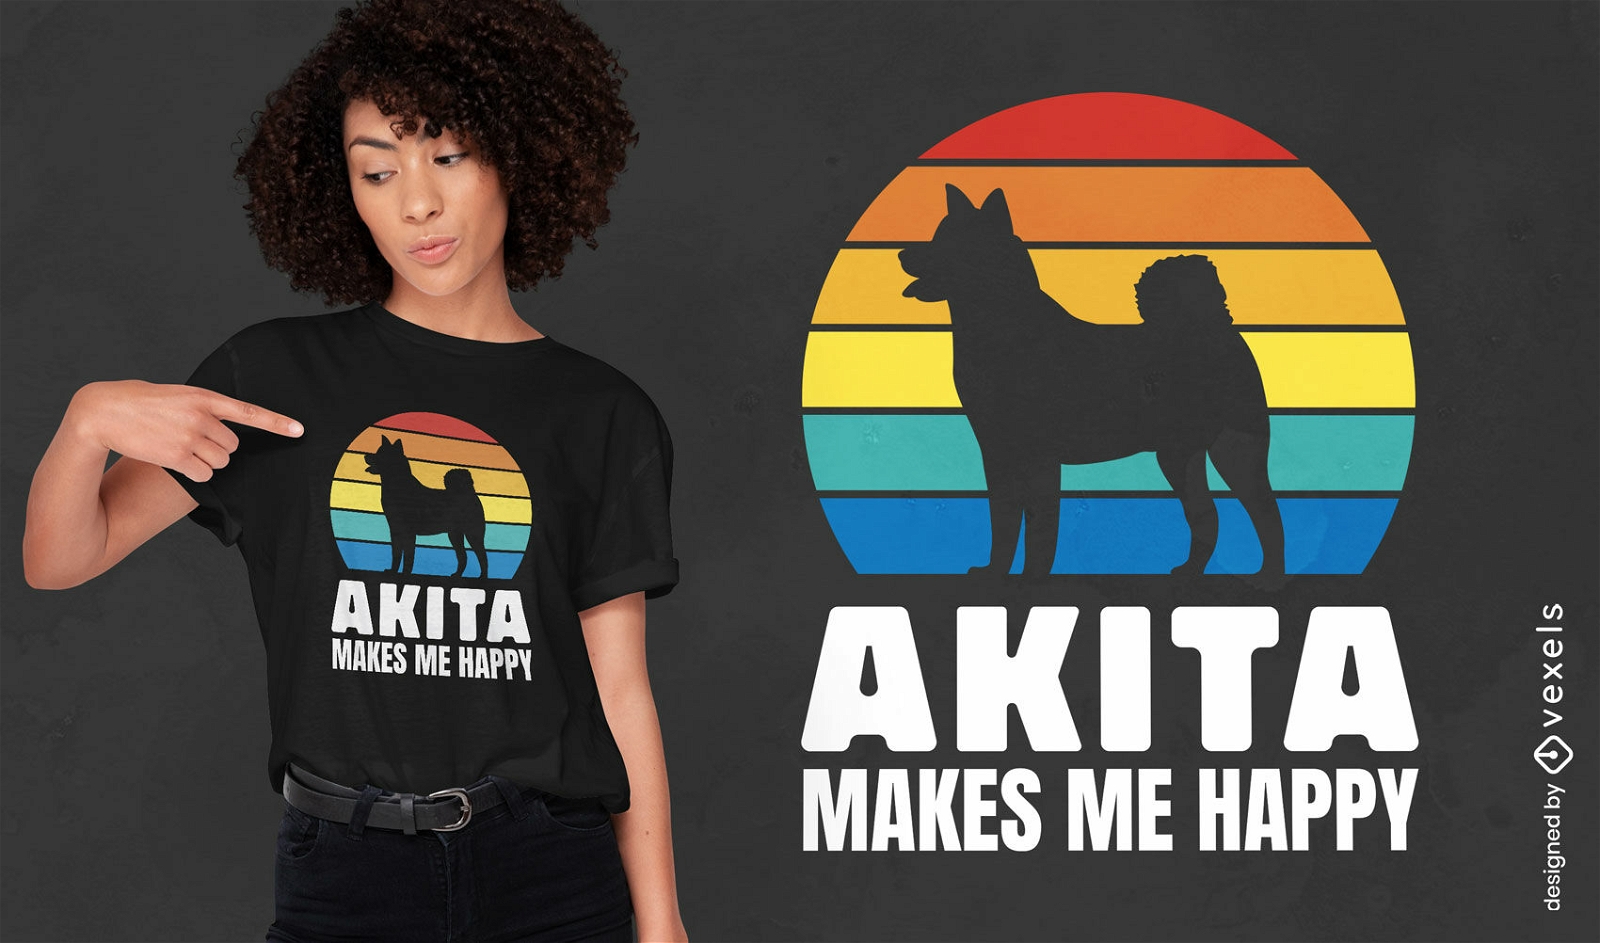 Akita me faz feliz design de camiseta de cachorro